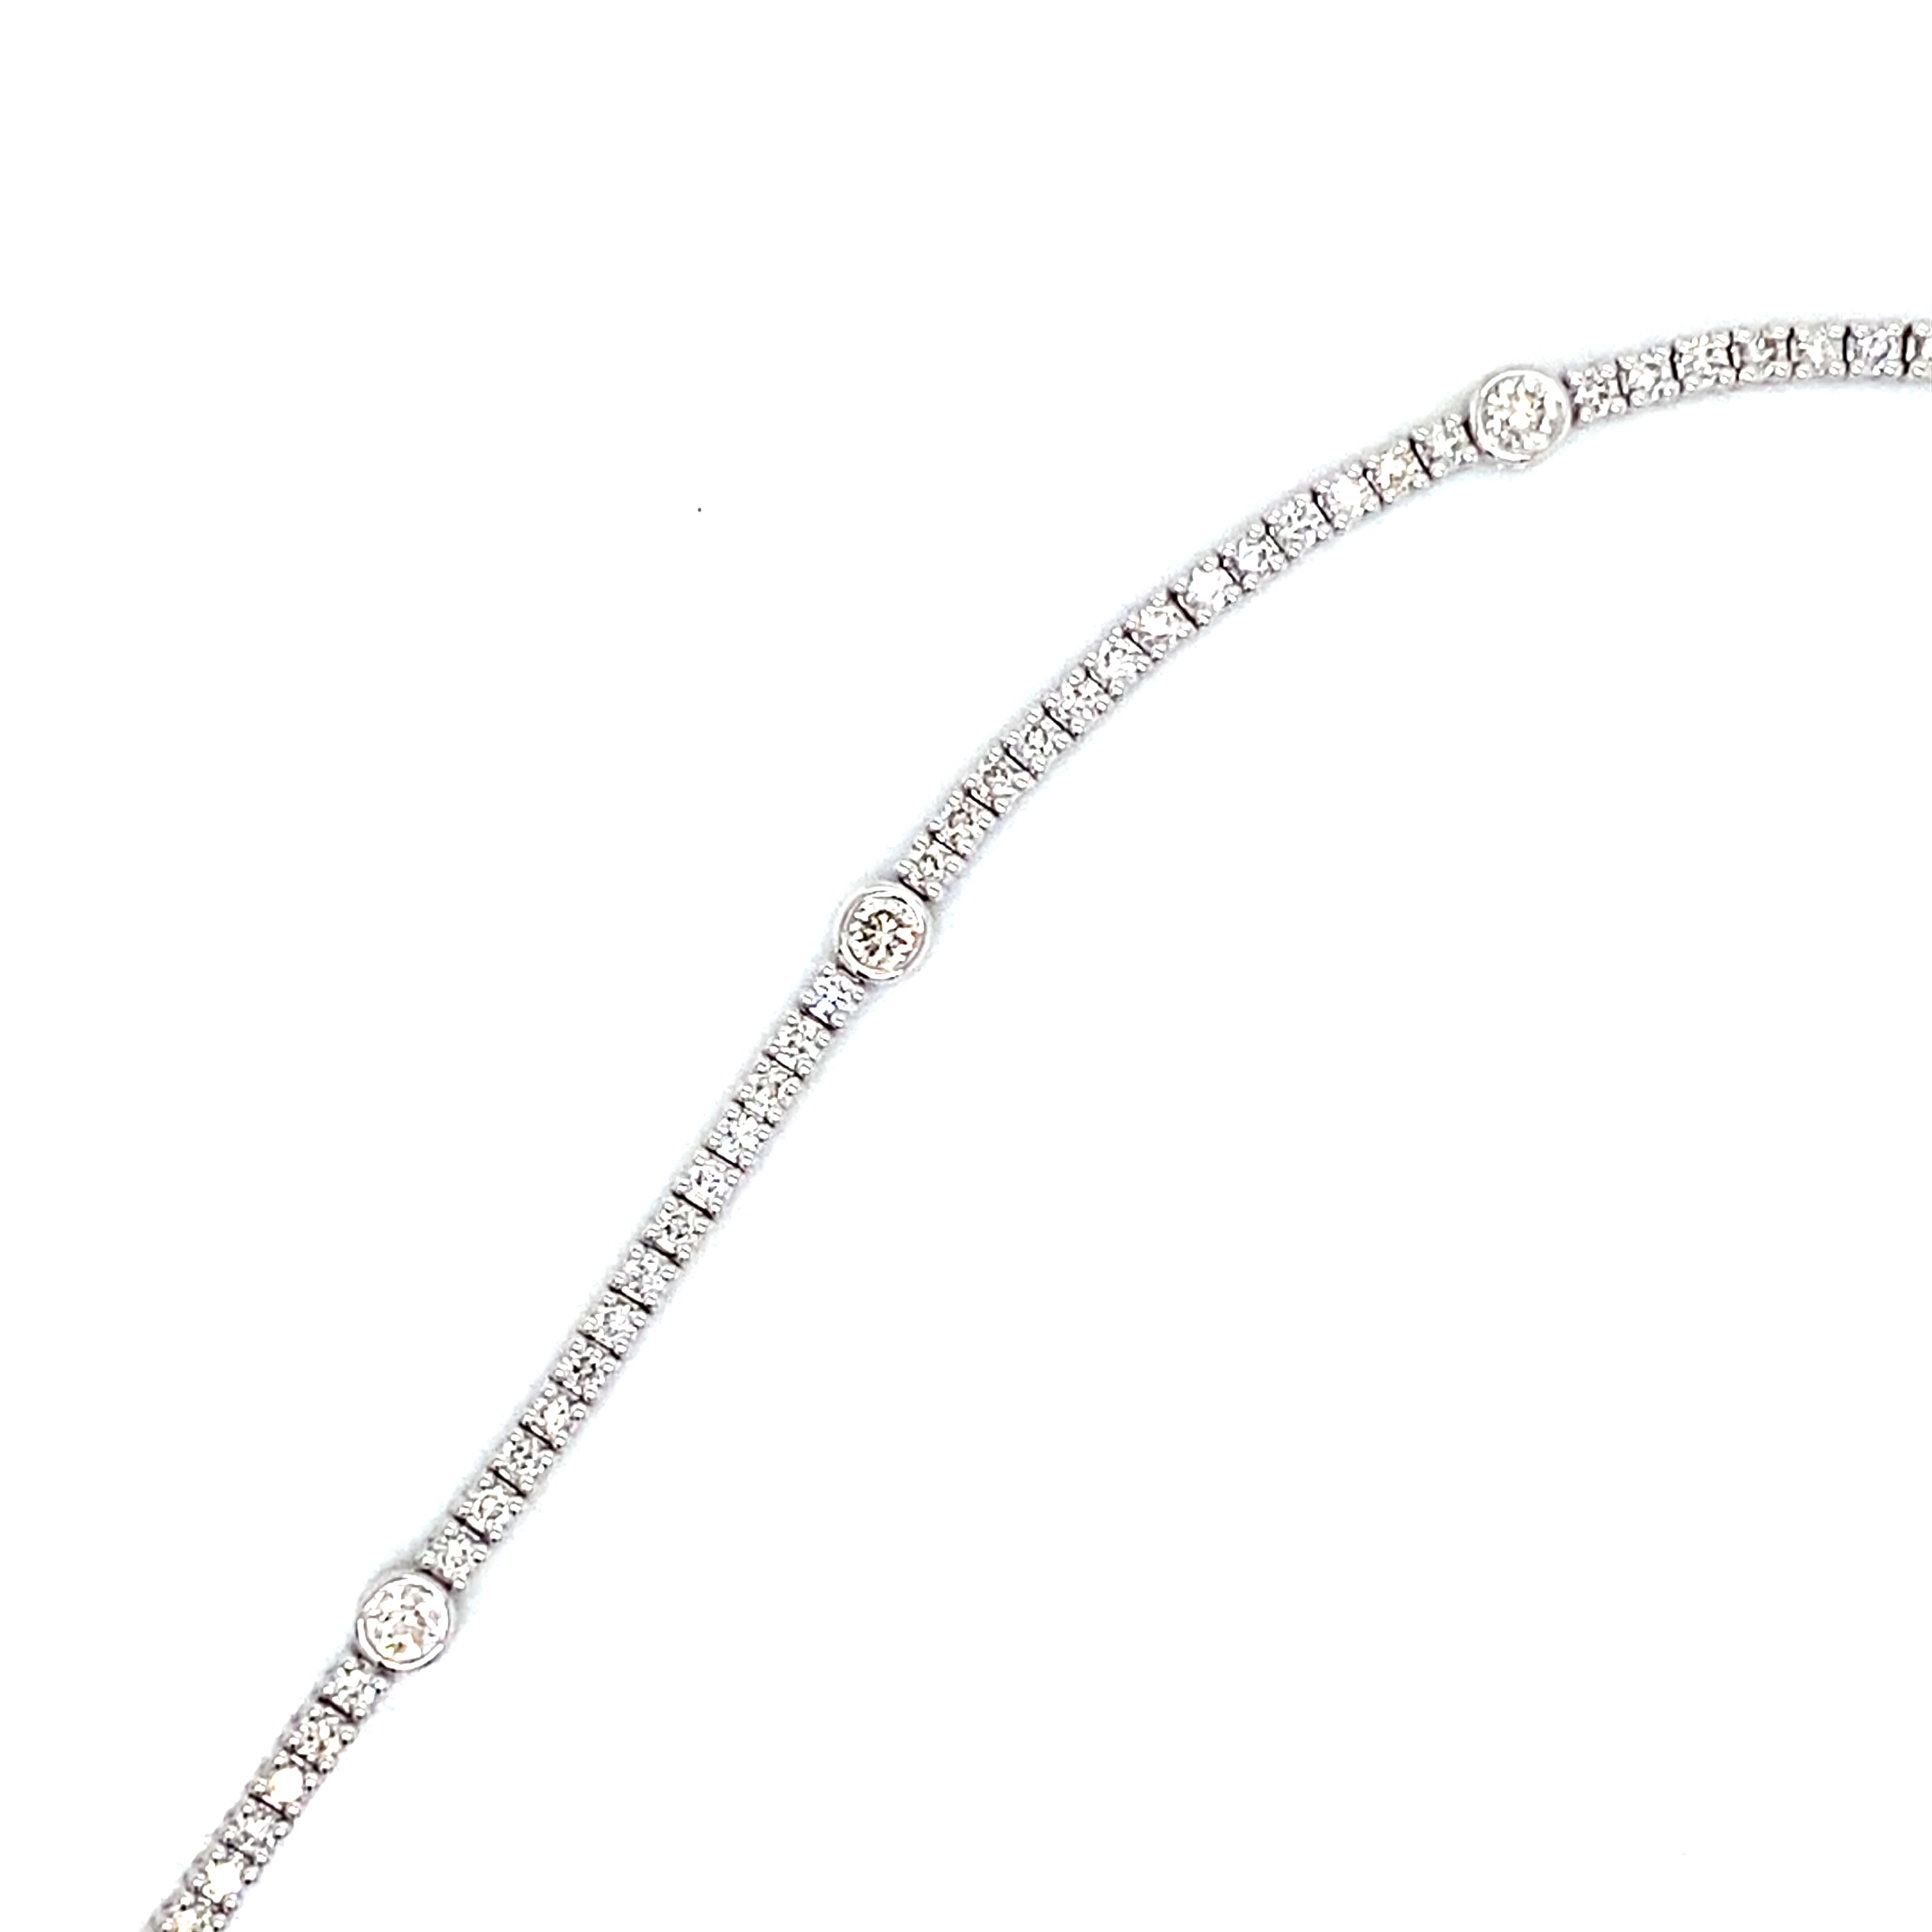 A Platinum and Diamond Line Bracelet with Diamond Spot Detail